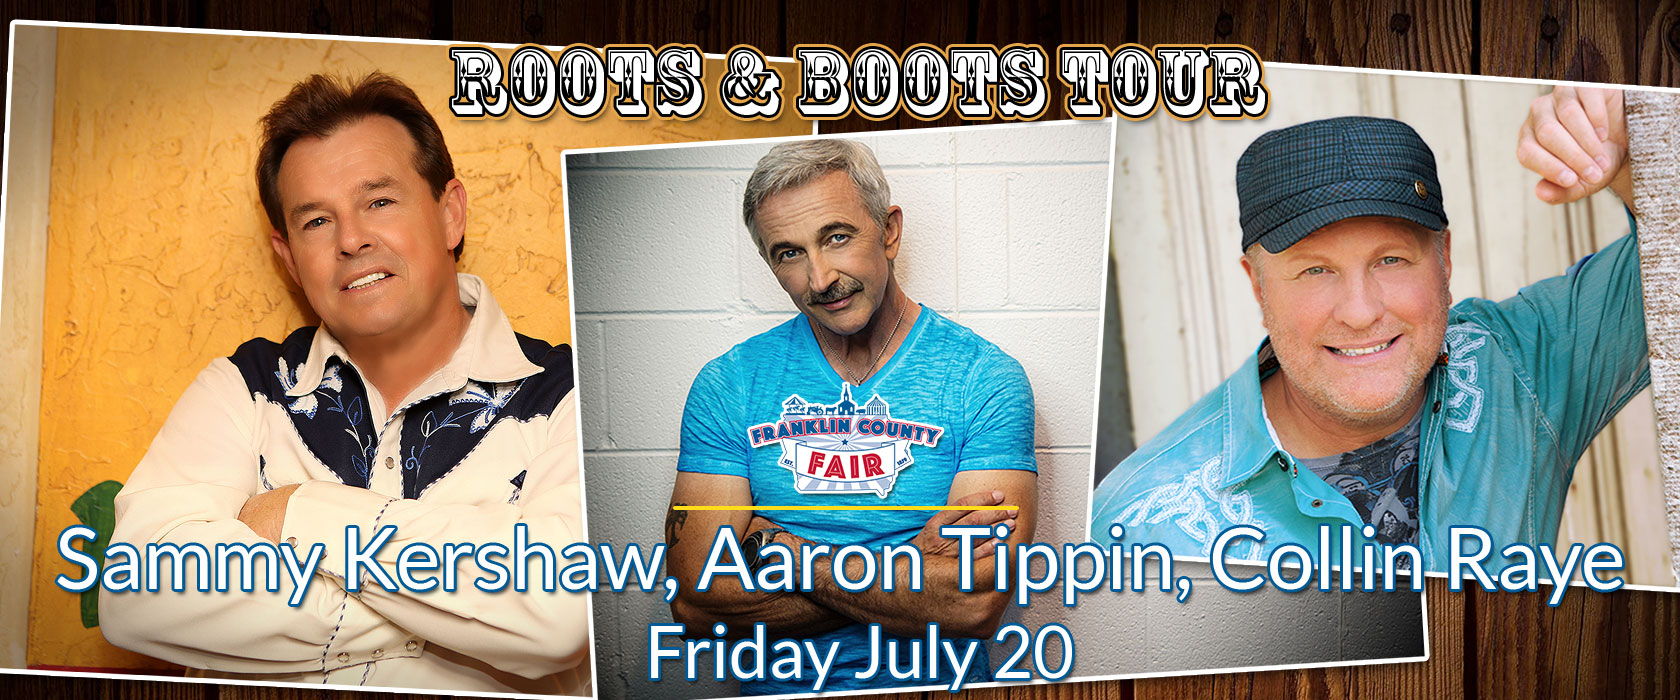 Franklin County Fair Sammy Kershaw, Collin Raye, Aaron Tippin - Friday July 20